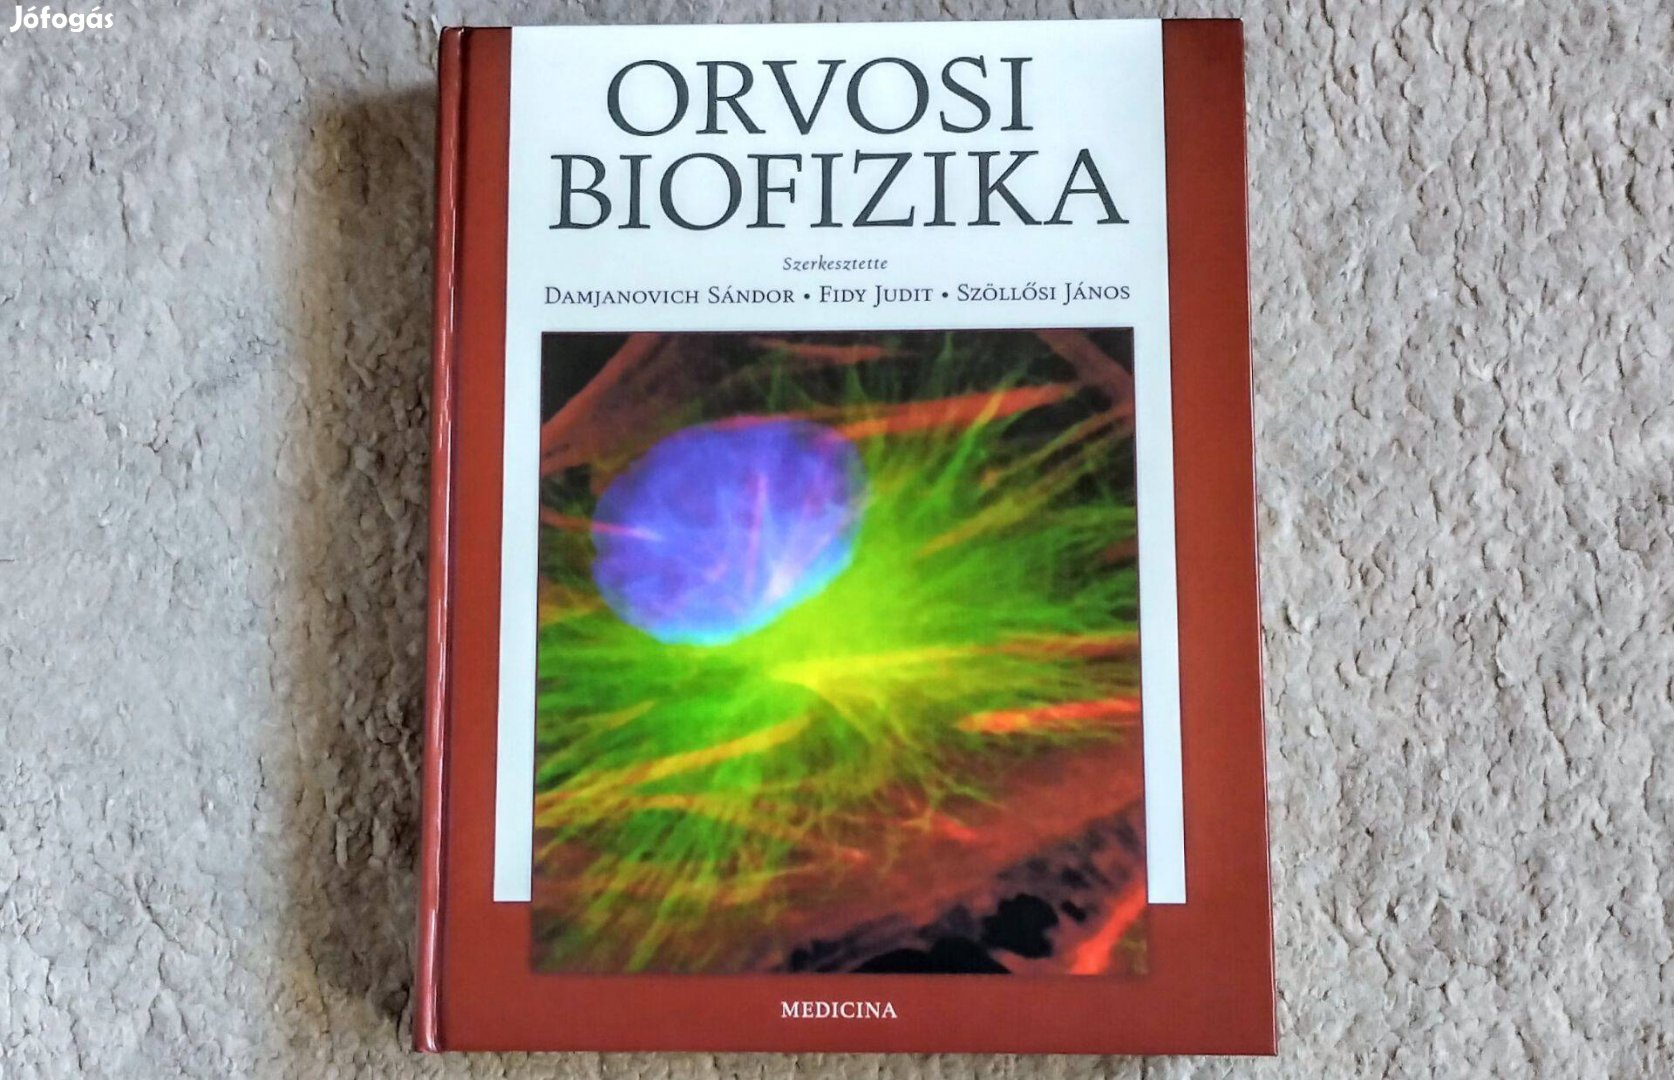 Orvosi biofizika - 638 oldal, 3. javított kiadás, 2007 - Damjanovich